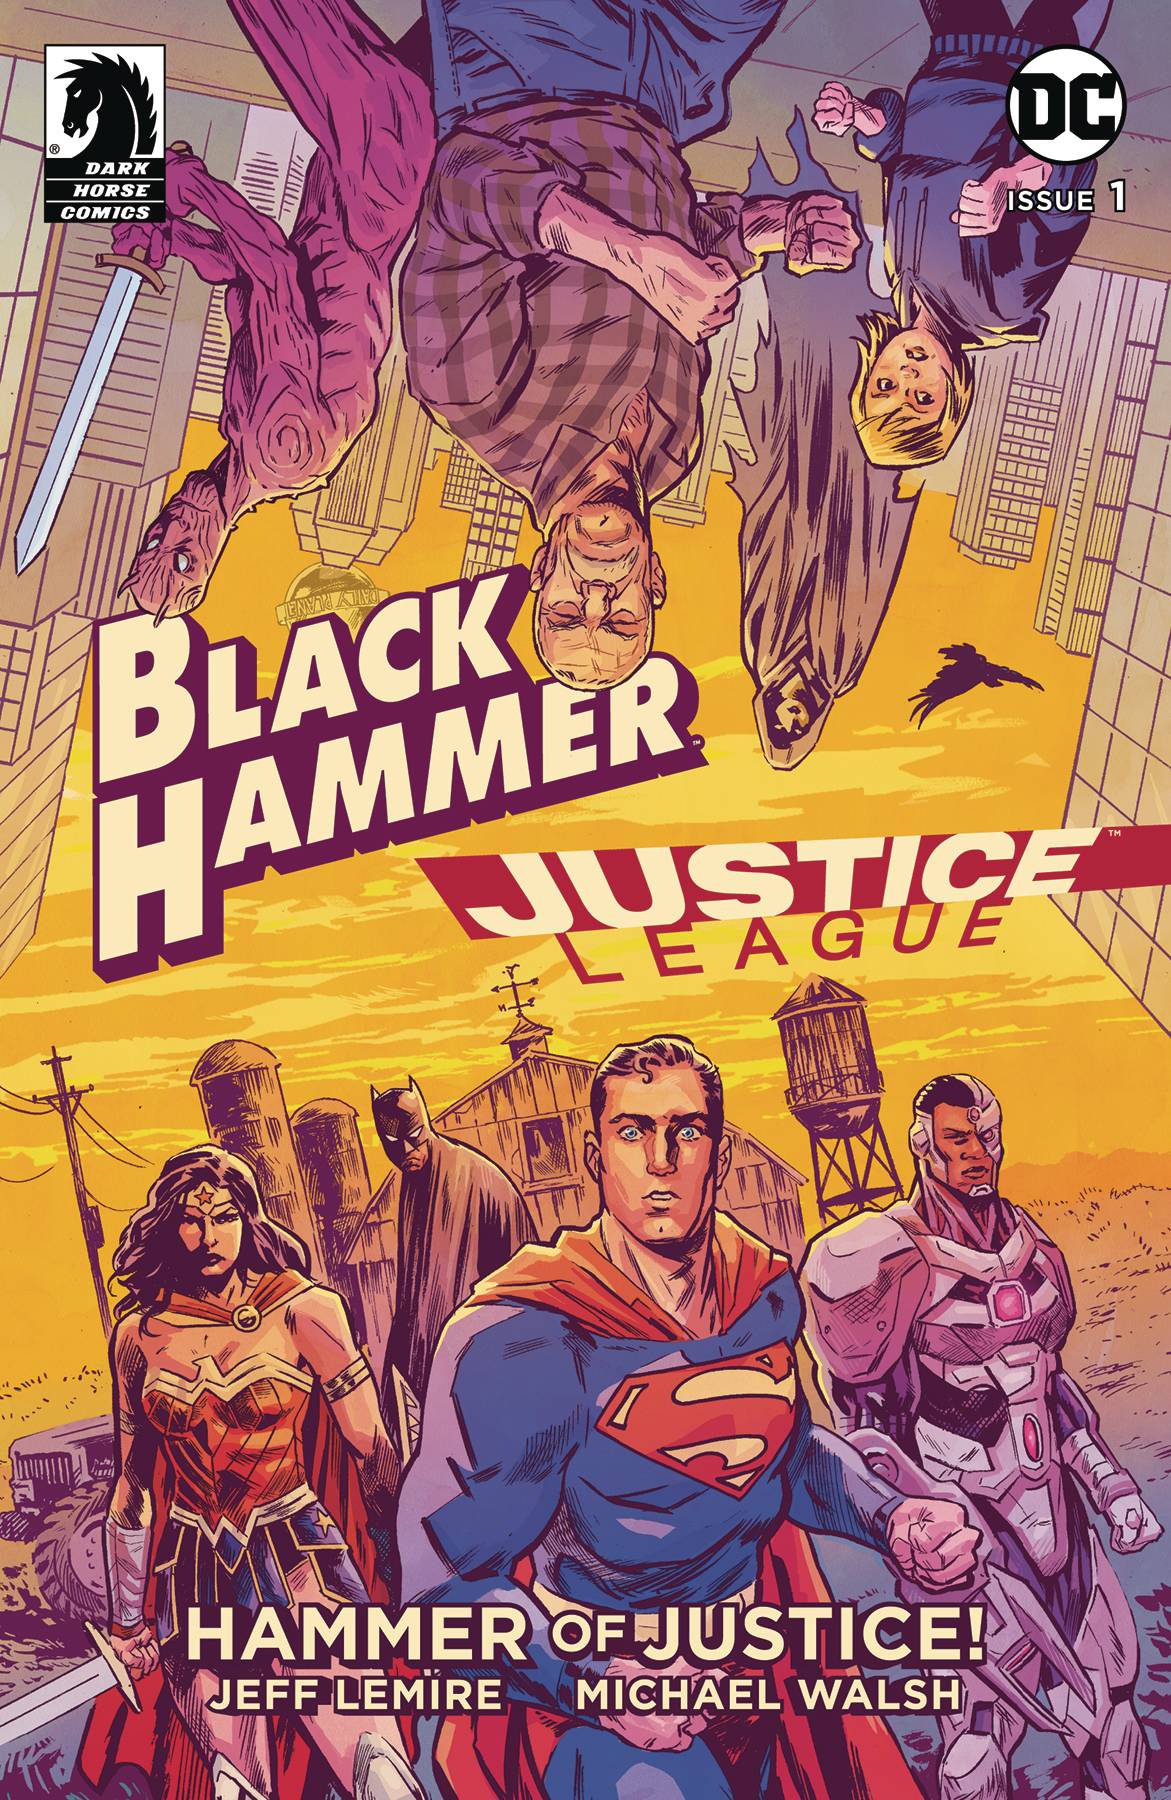 BLACK HAMMER JUSTICE LEAGUE #1 (OF 5) CVR A WALSH